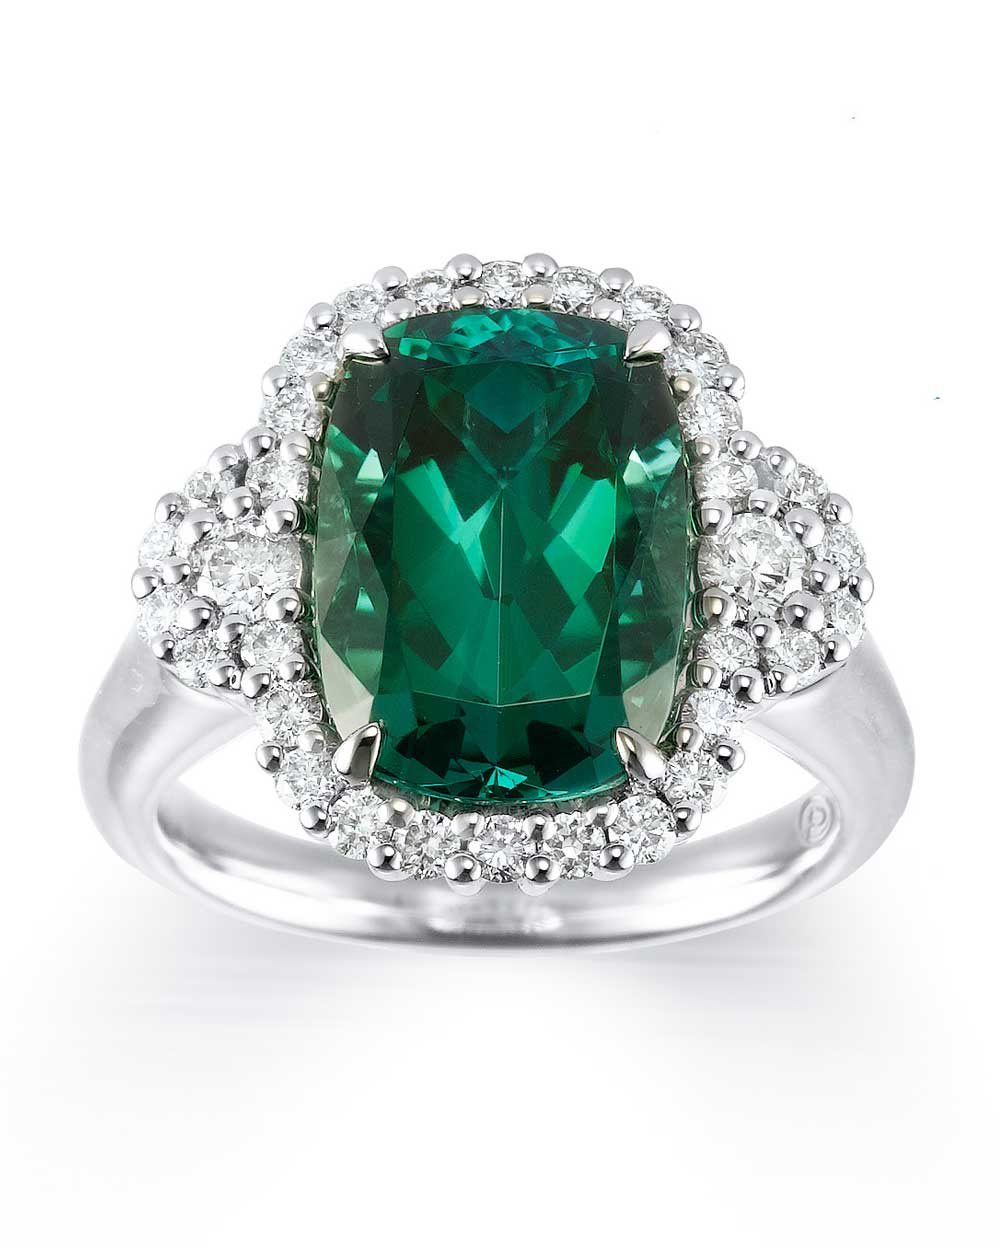 Partridge Jewellers ring, $11,800